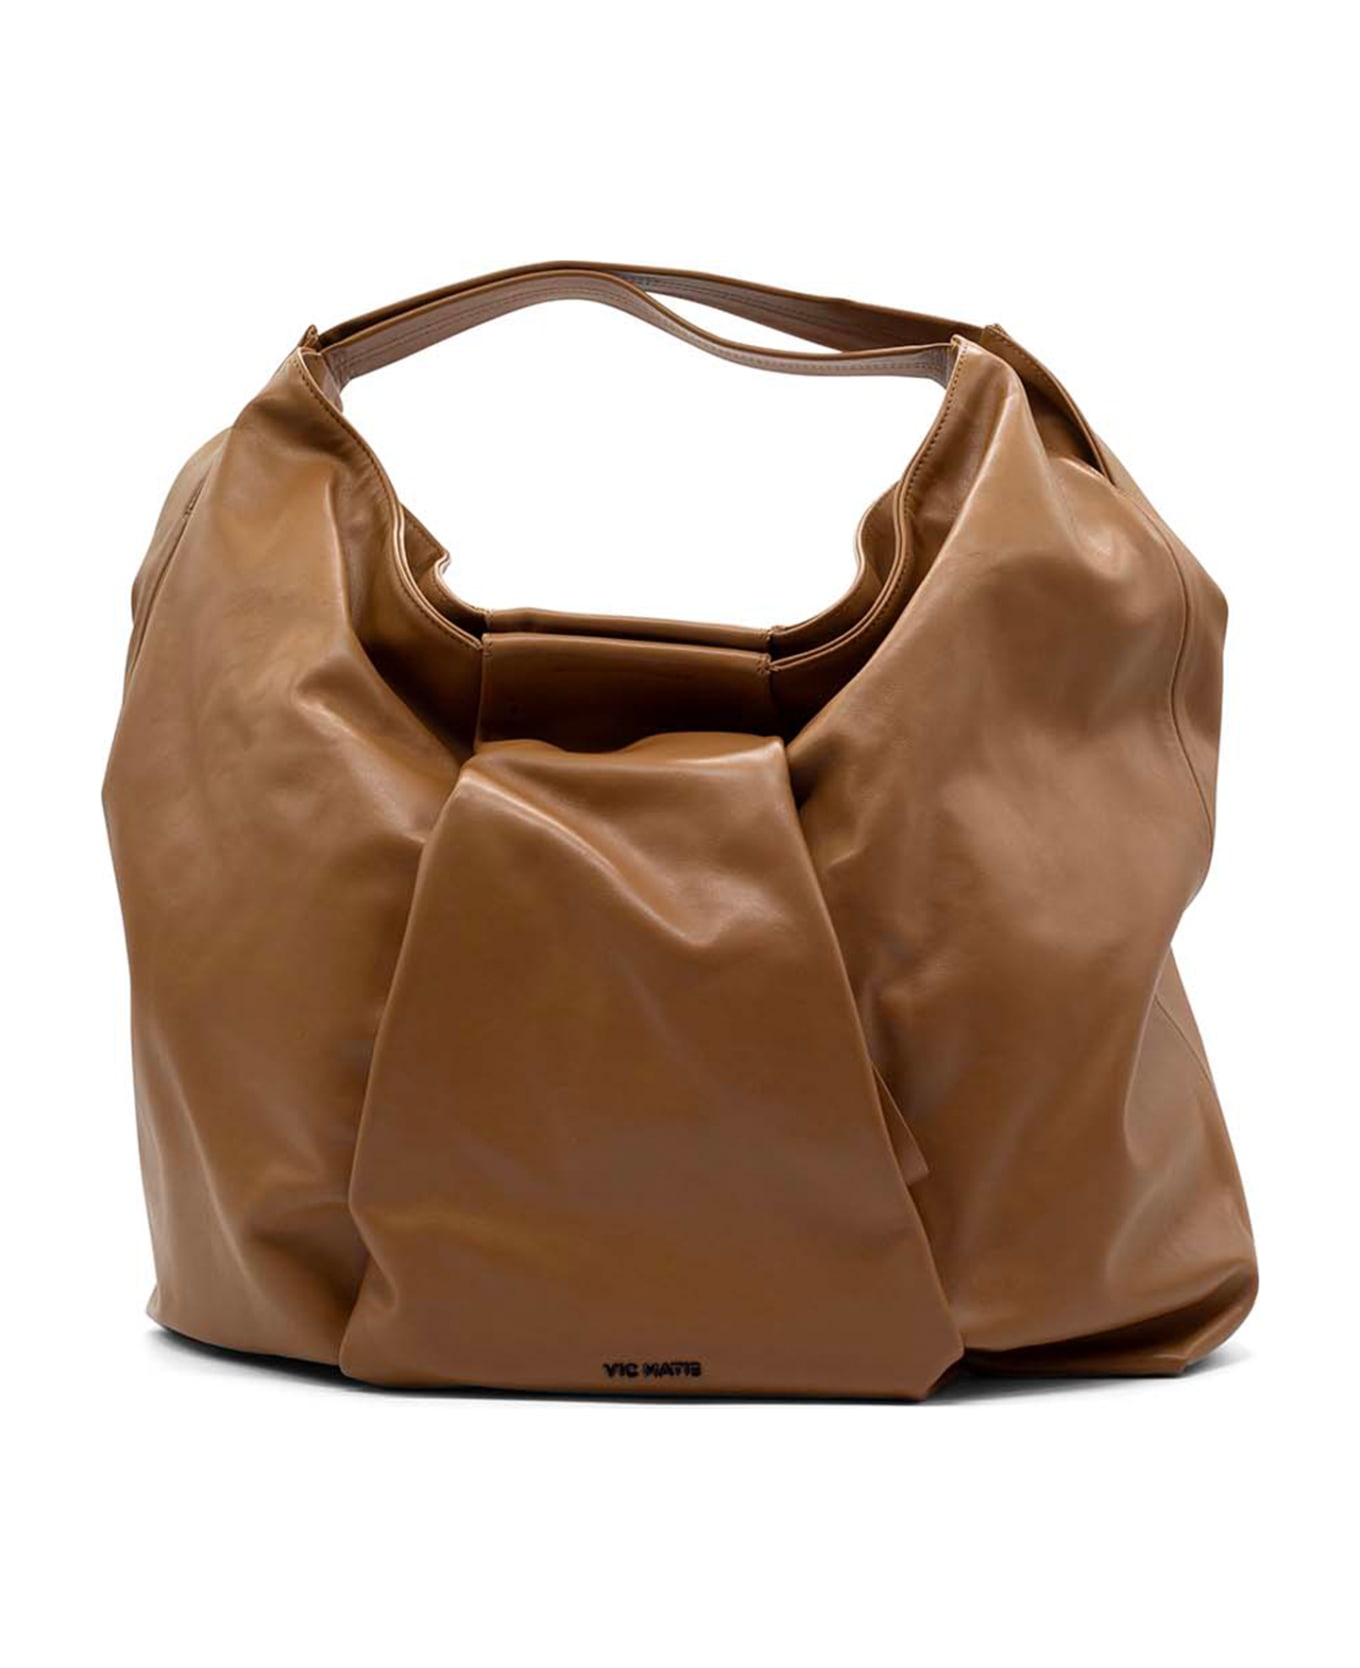 Vic Matié Biscuit Leather Shoulder Bag - BISCUIT